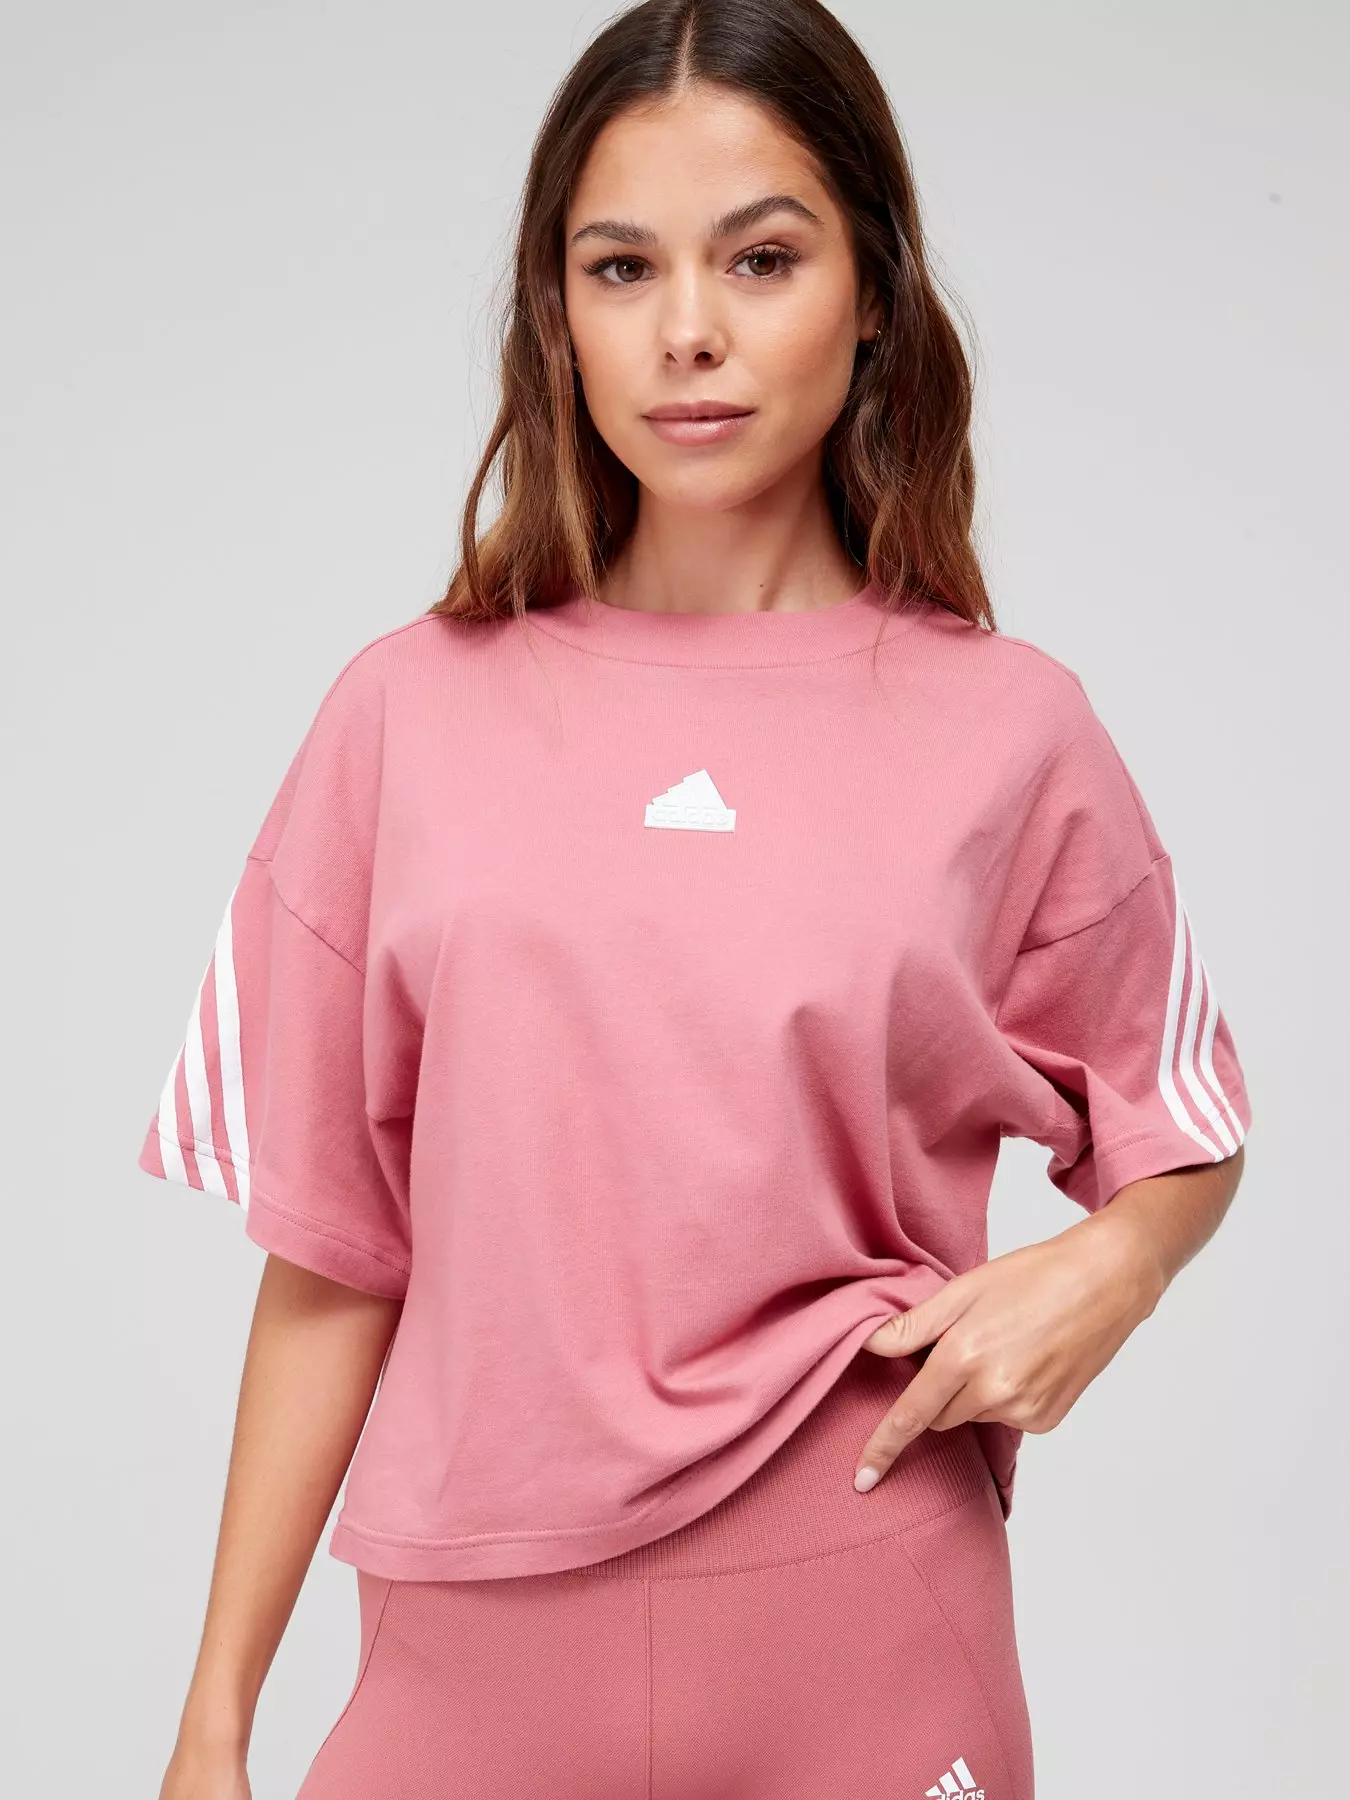 | Adidas | T-shirts | Womens | Sports & leisure | www.very.co.uk